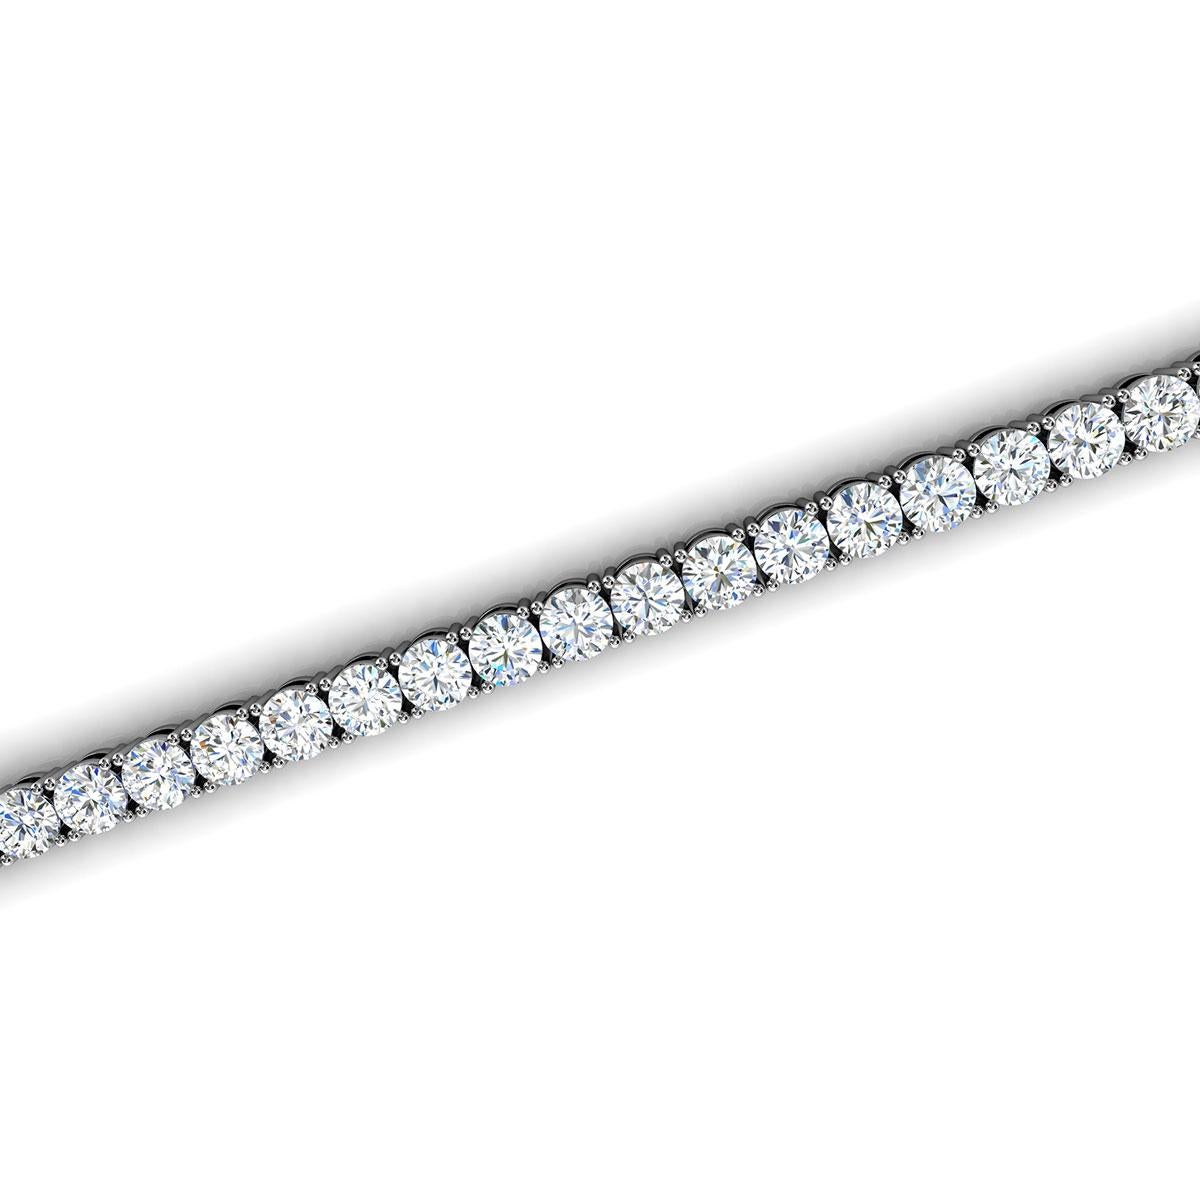 8ct diamond tennis bracelet